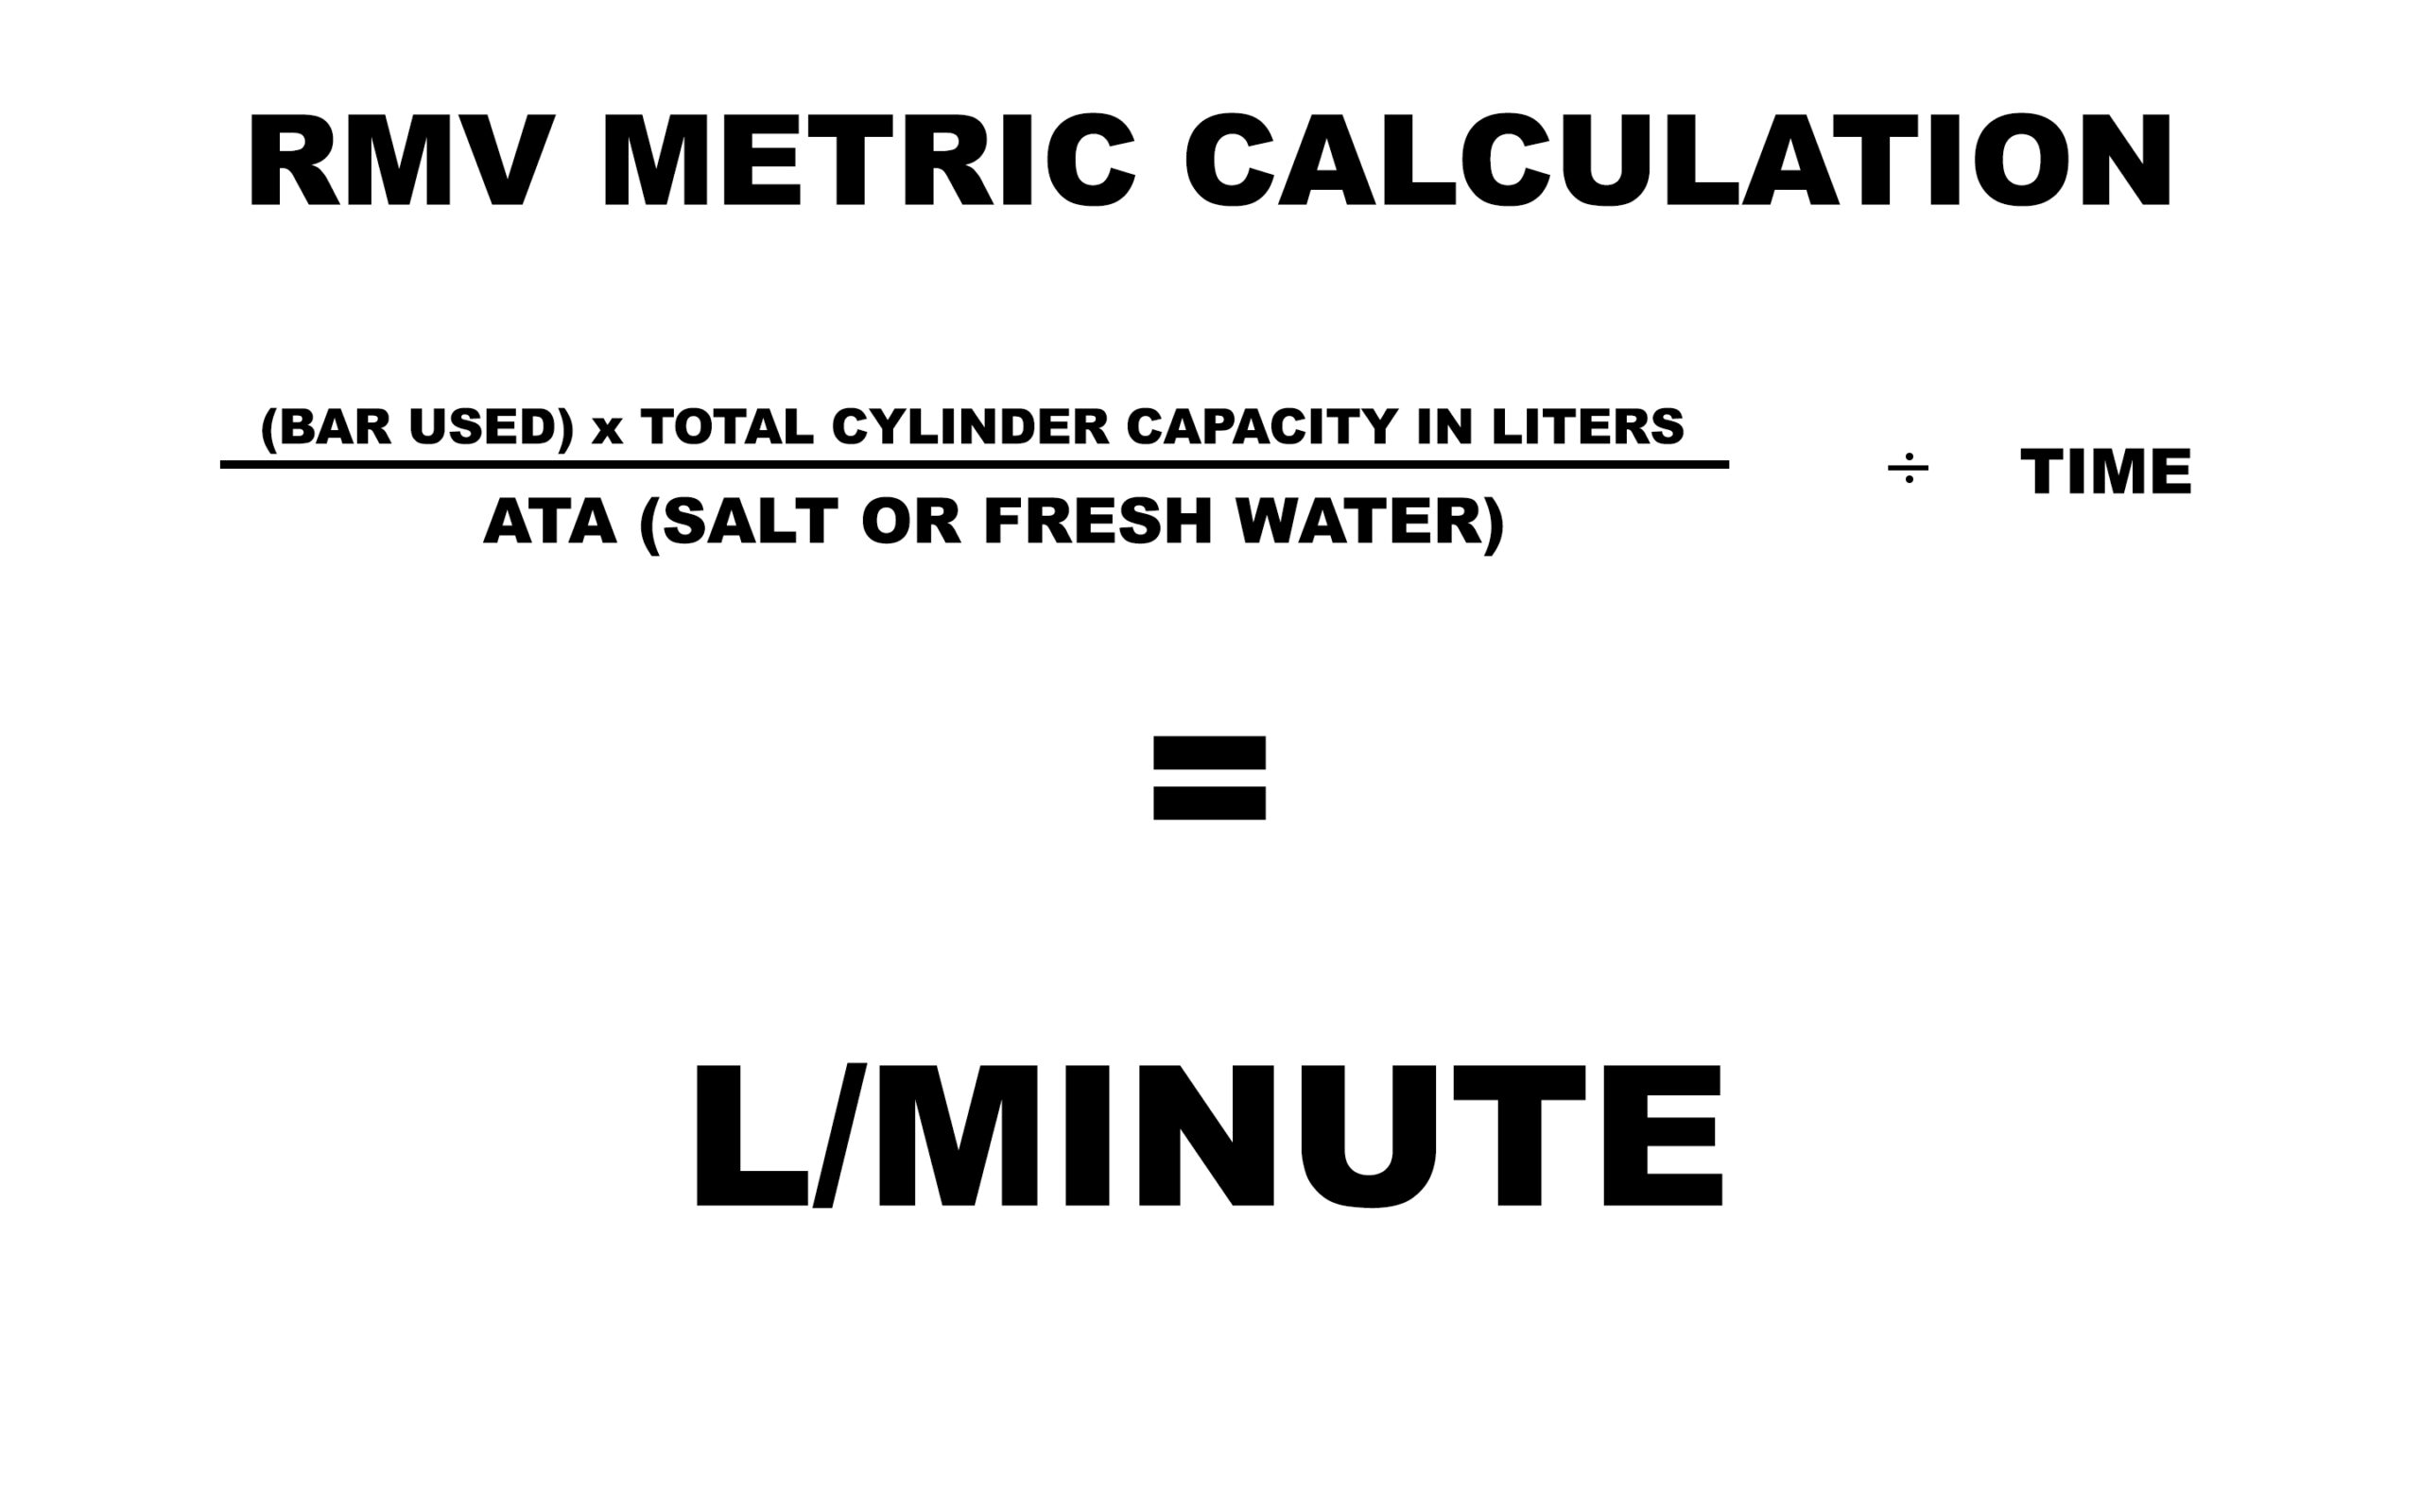 RMV calculation in metric